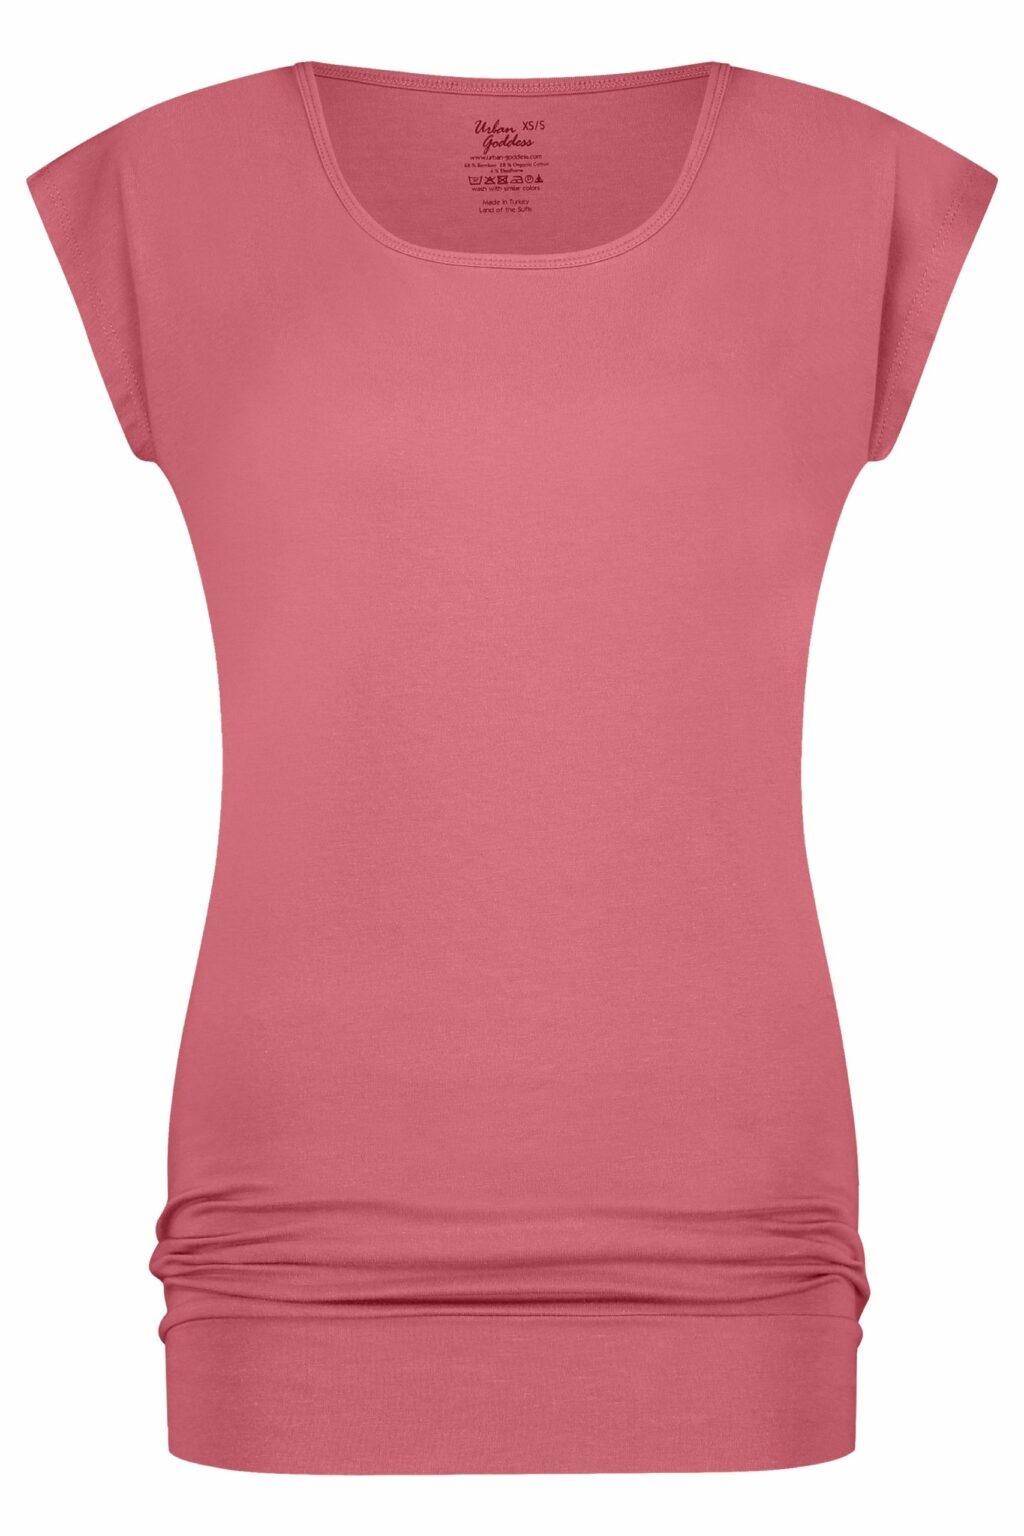 ACHAMANA Loose flow yoga top - Dames yoga t-shirt met ingebouwde  ondersteuning - Lavendel